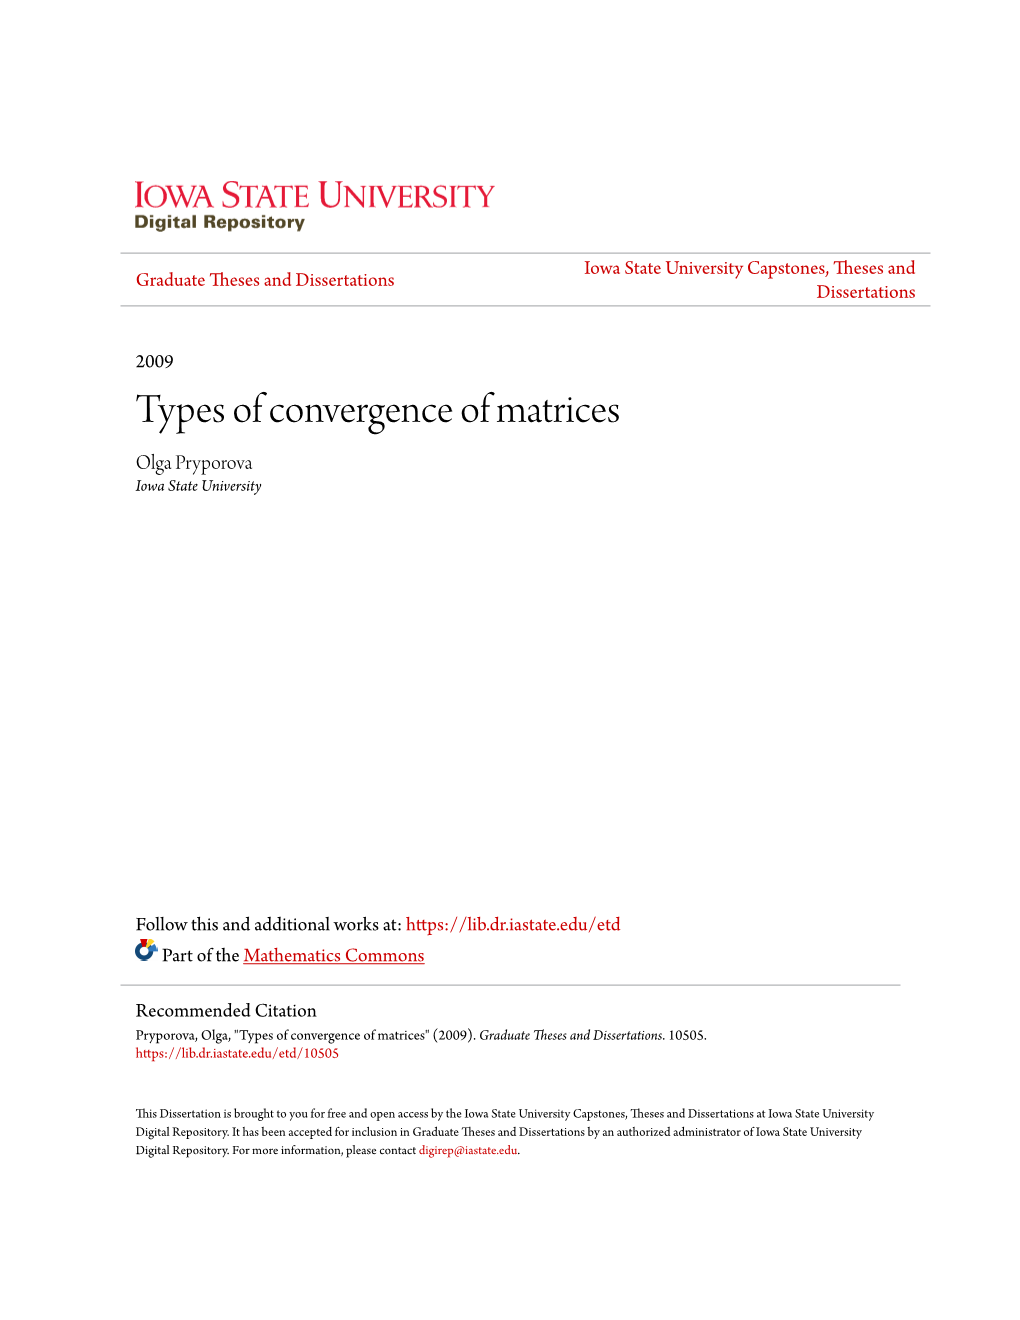 Types of Convergence of Matrices Olga Pryporova Iowa State University